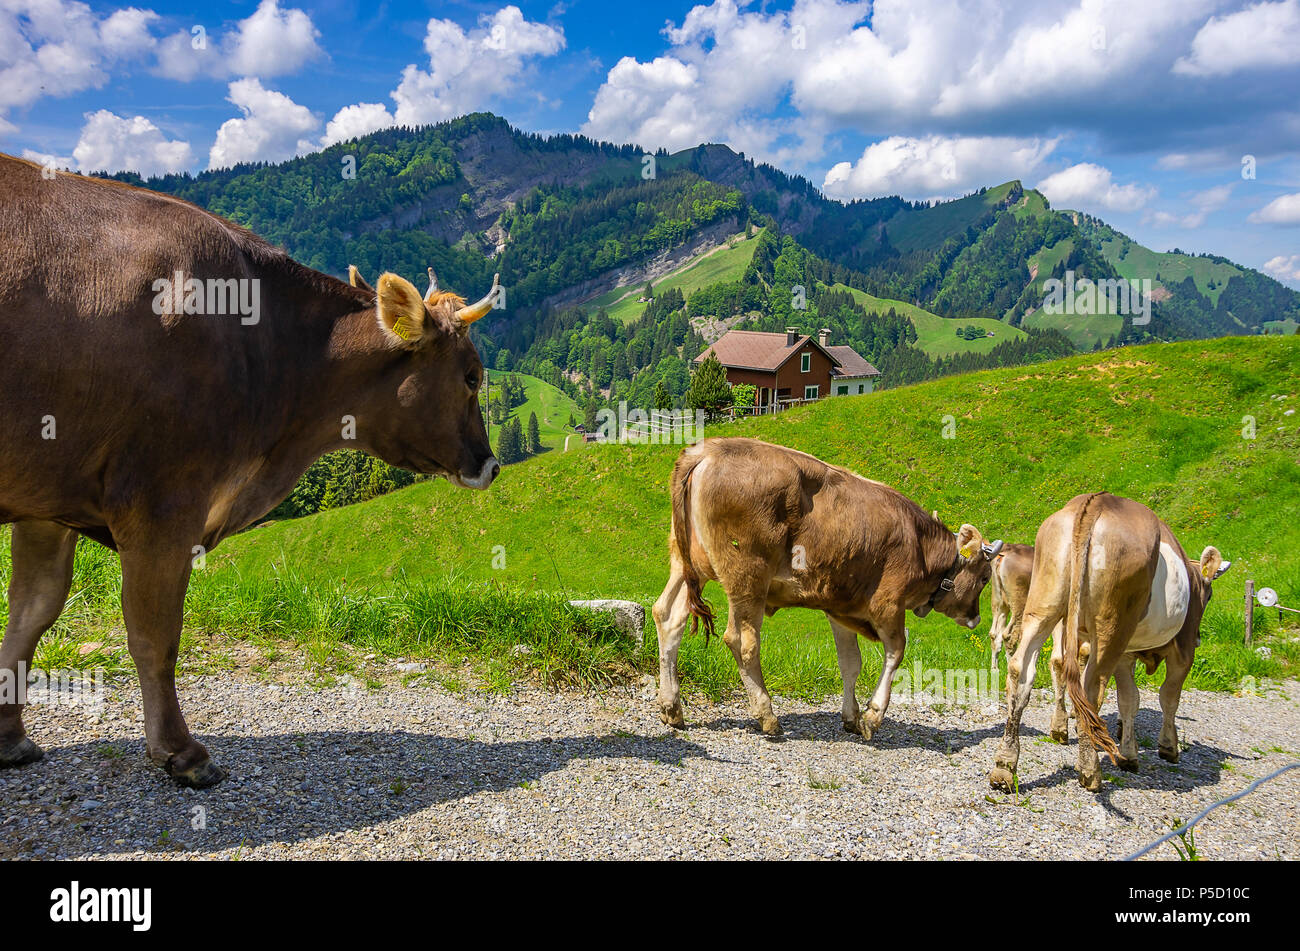 Cows with properly attached ear tags walk down a dirt road in the Swiss Alps near Urnäsch and Schwägalp, canton Appenzell Ausserrhoden, Switzerland. Stock Photo